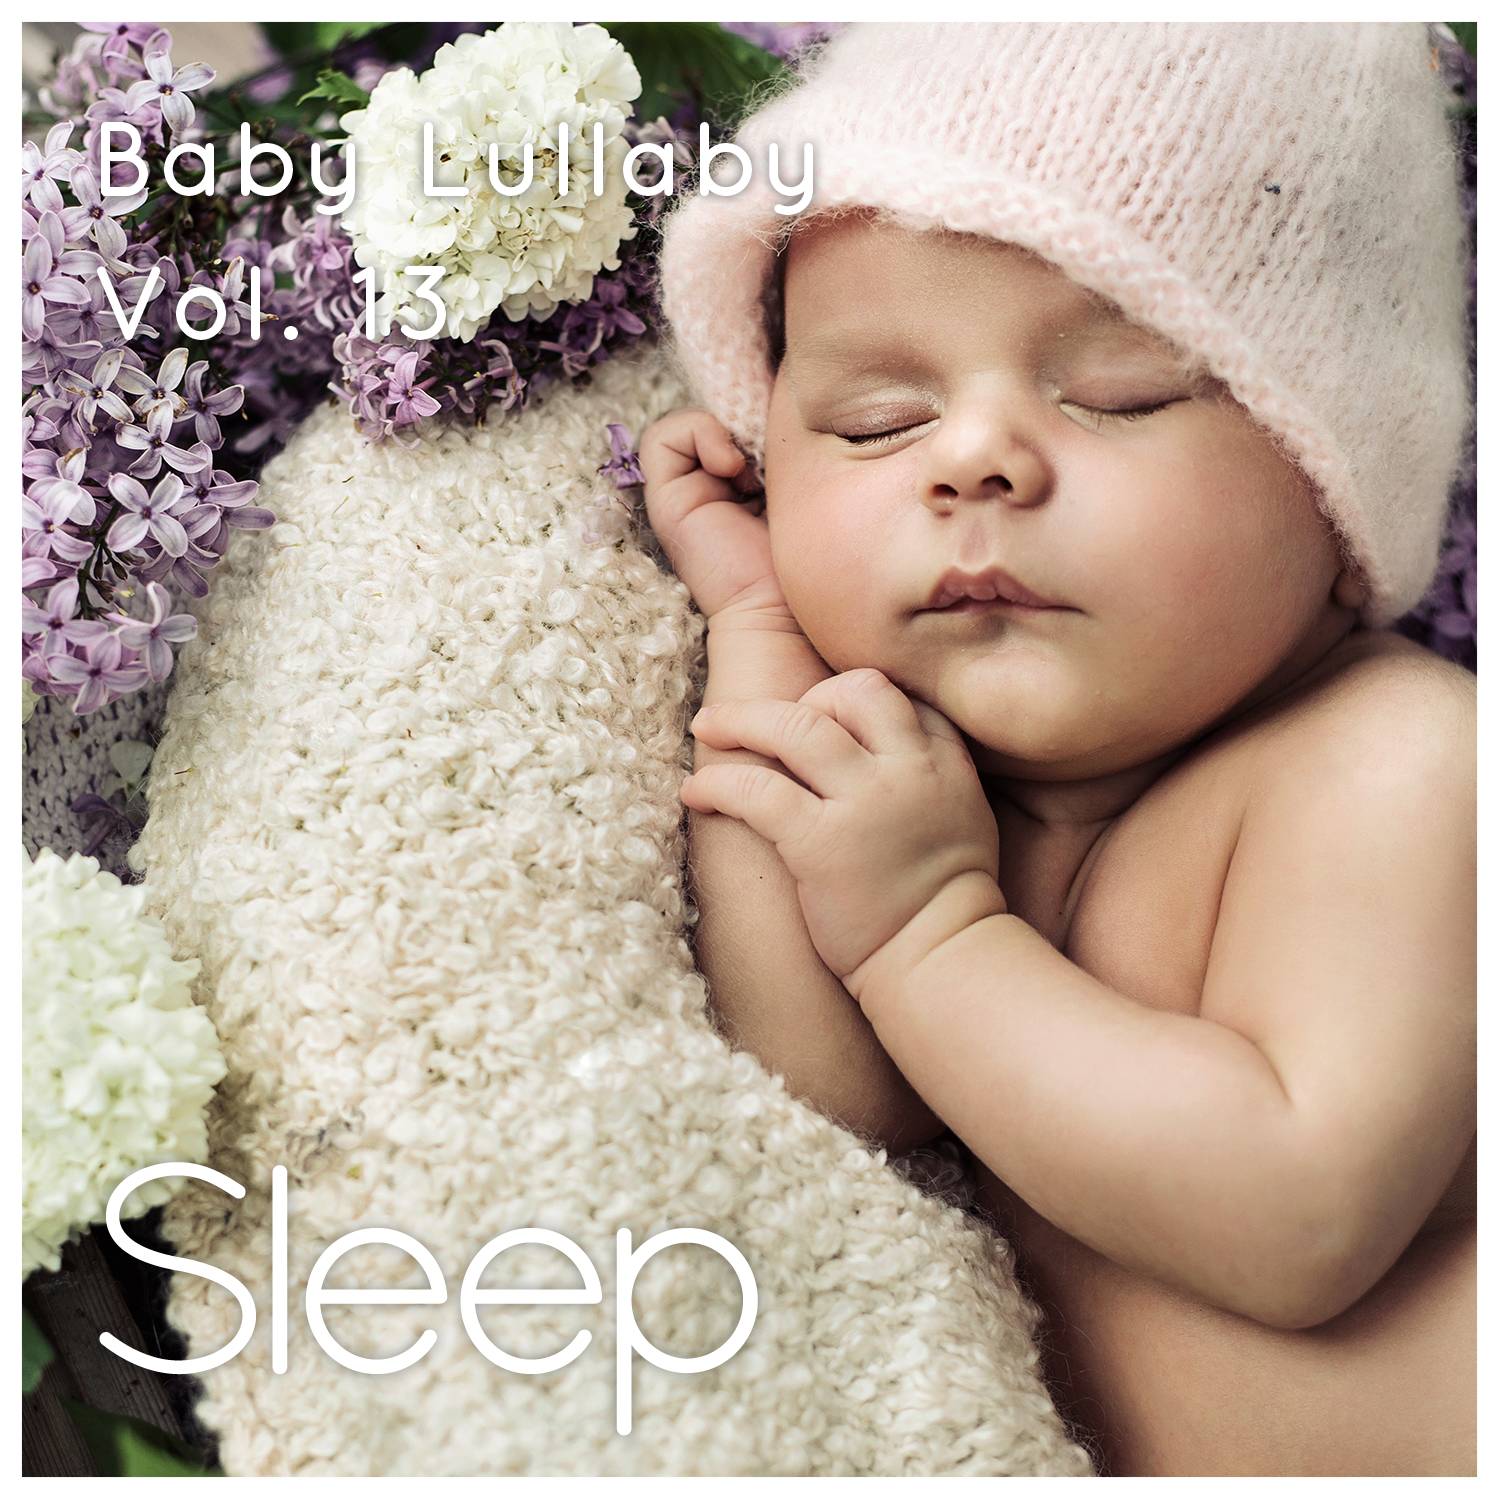 Baby Sleep - The Tumble Dryer Lullaby, Vol. 13